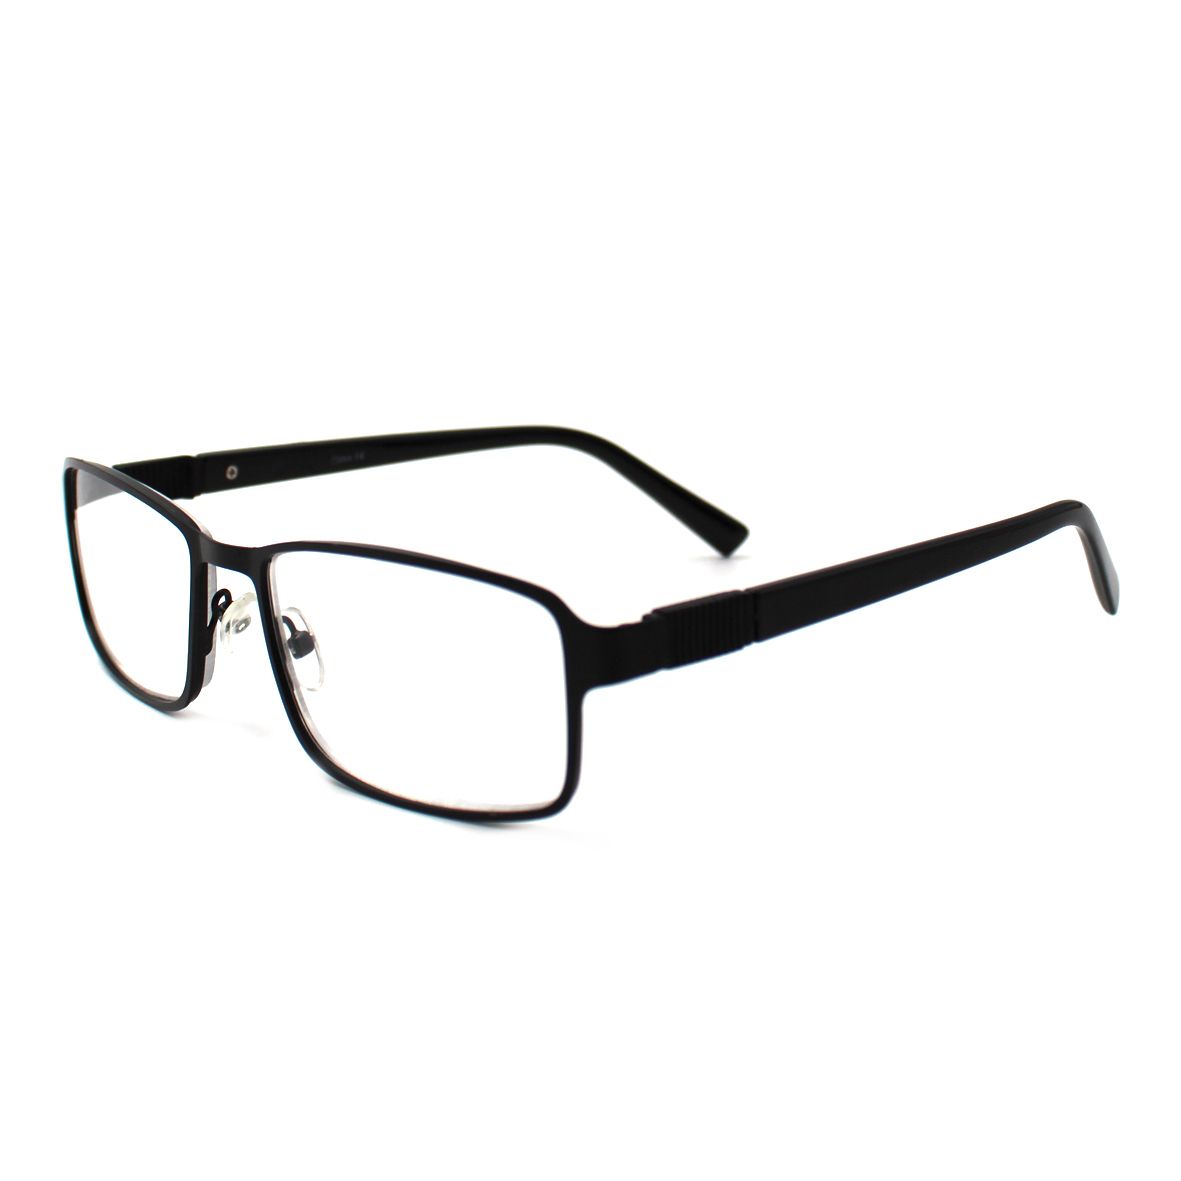 X-Tra Vision Square Reading Glasses - Hava - Black - +3.00 | Buy Online ...